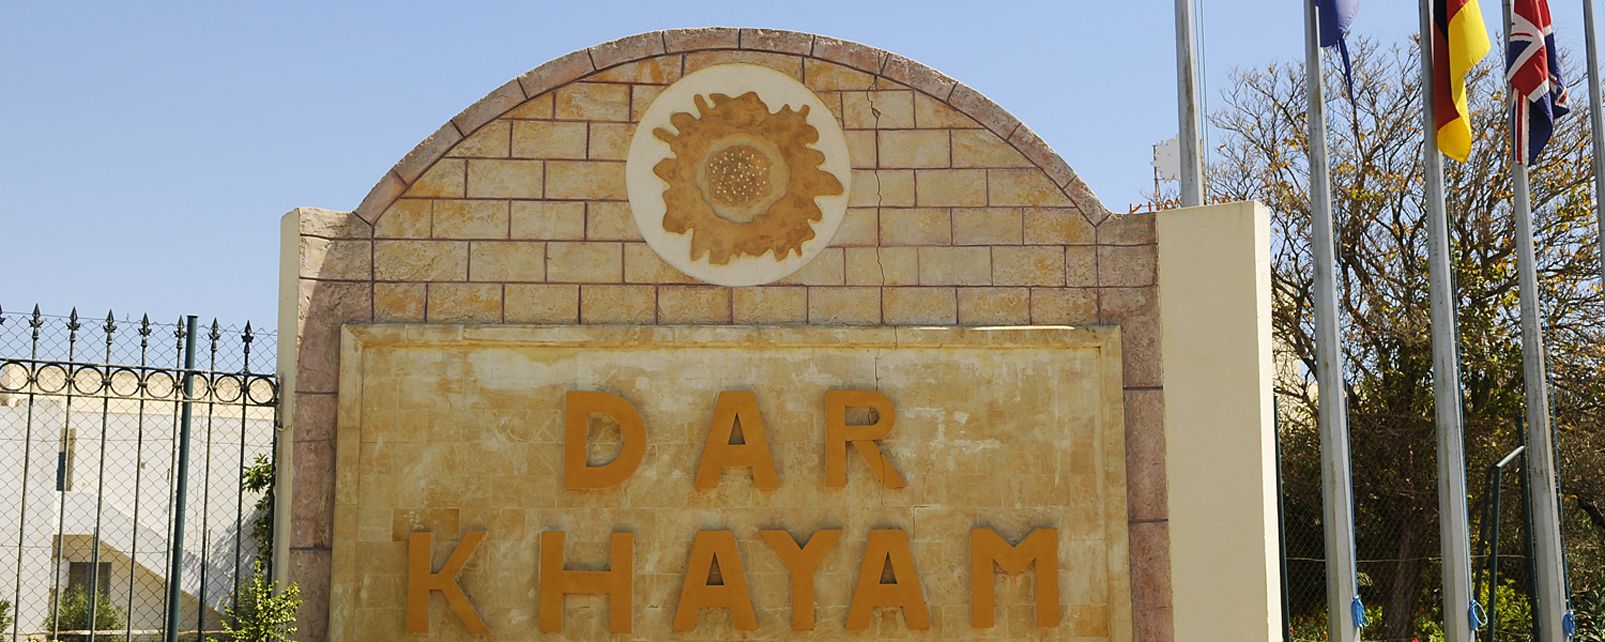 Hôtel Dar Khayam